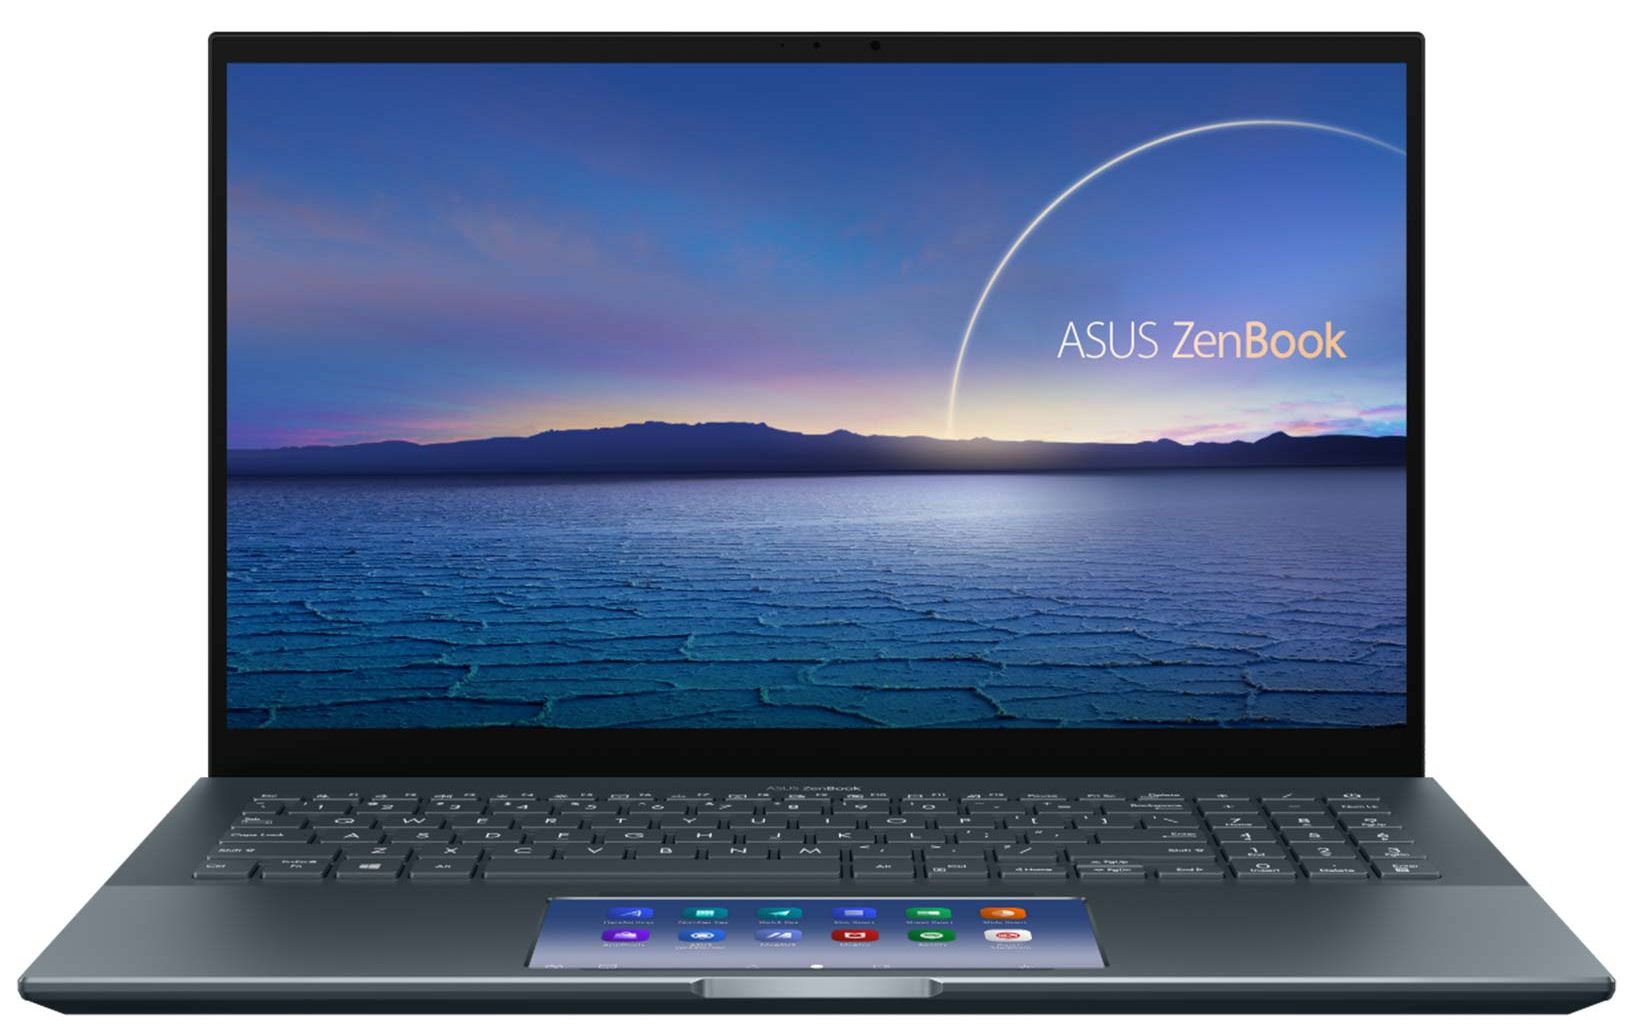 ASUS ZenBook Pro 15 UX535 hands-on: Half the price of a ZenBook Pro Duo 